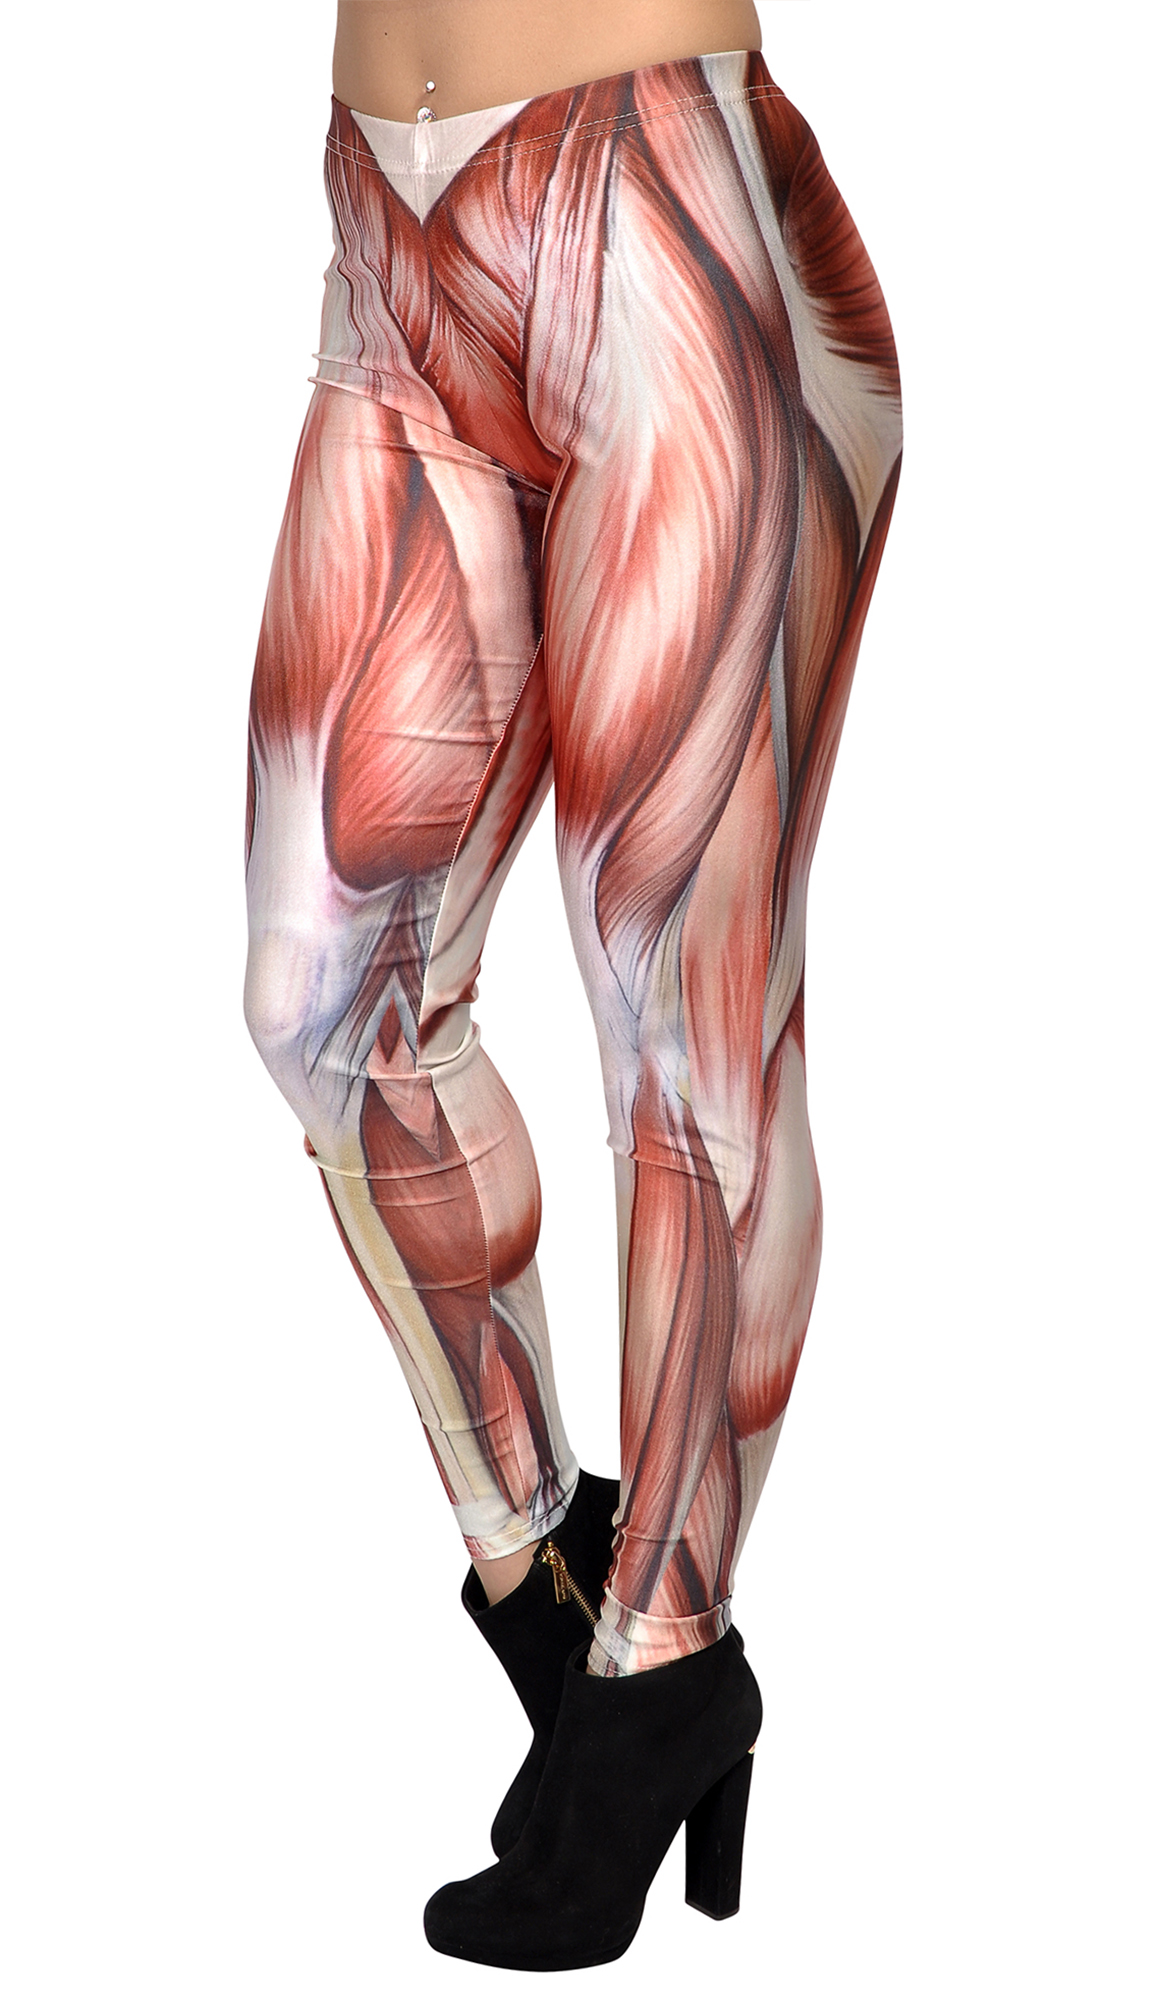 Women's Muscle Anatomy Leggings Medium